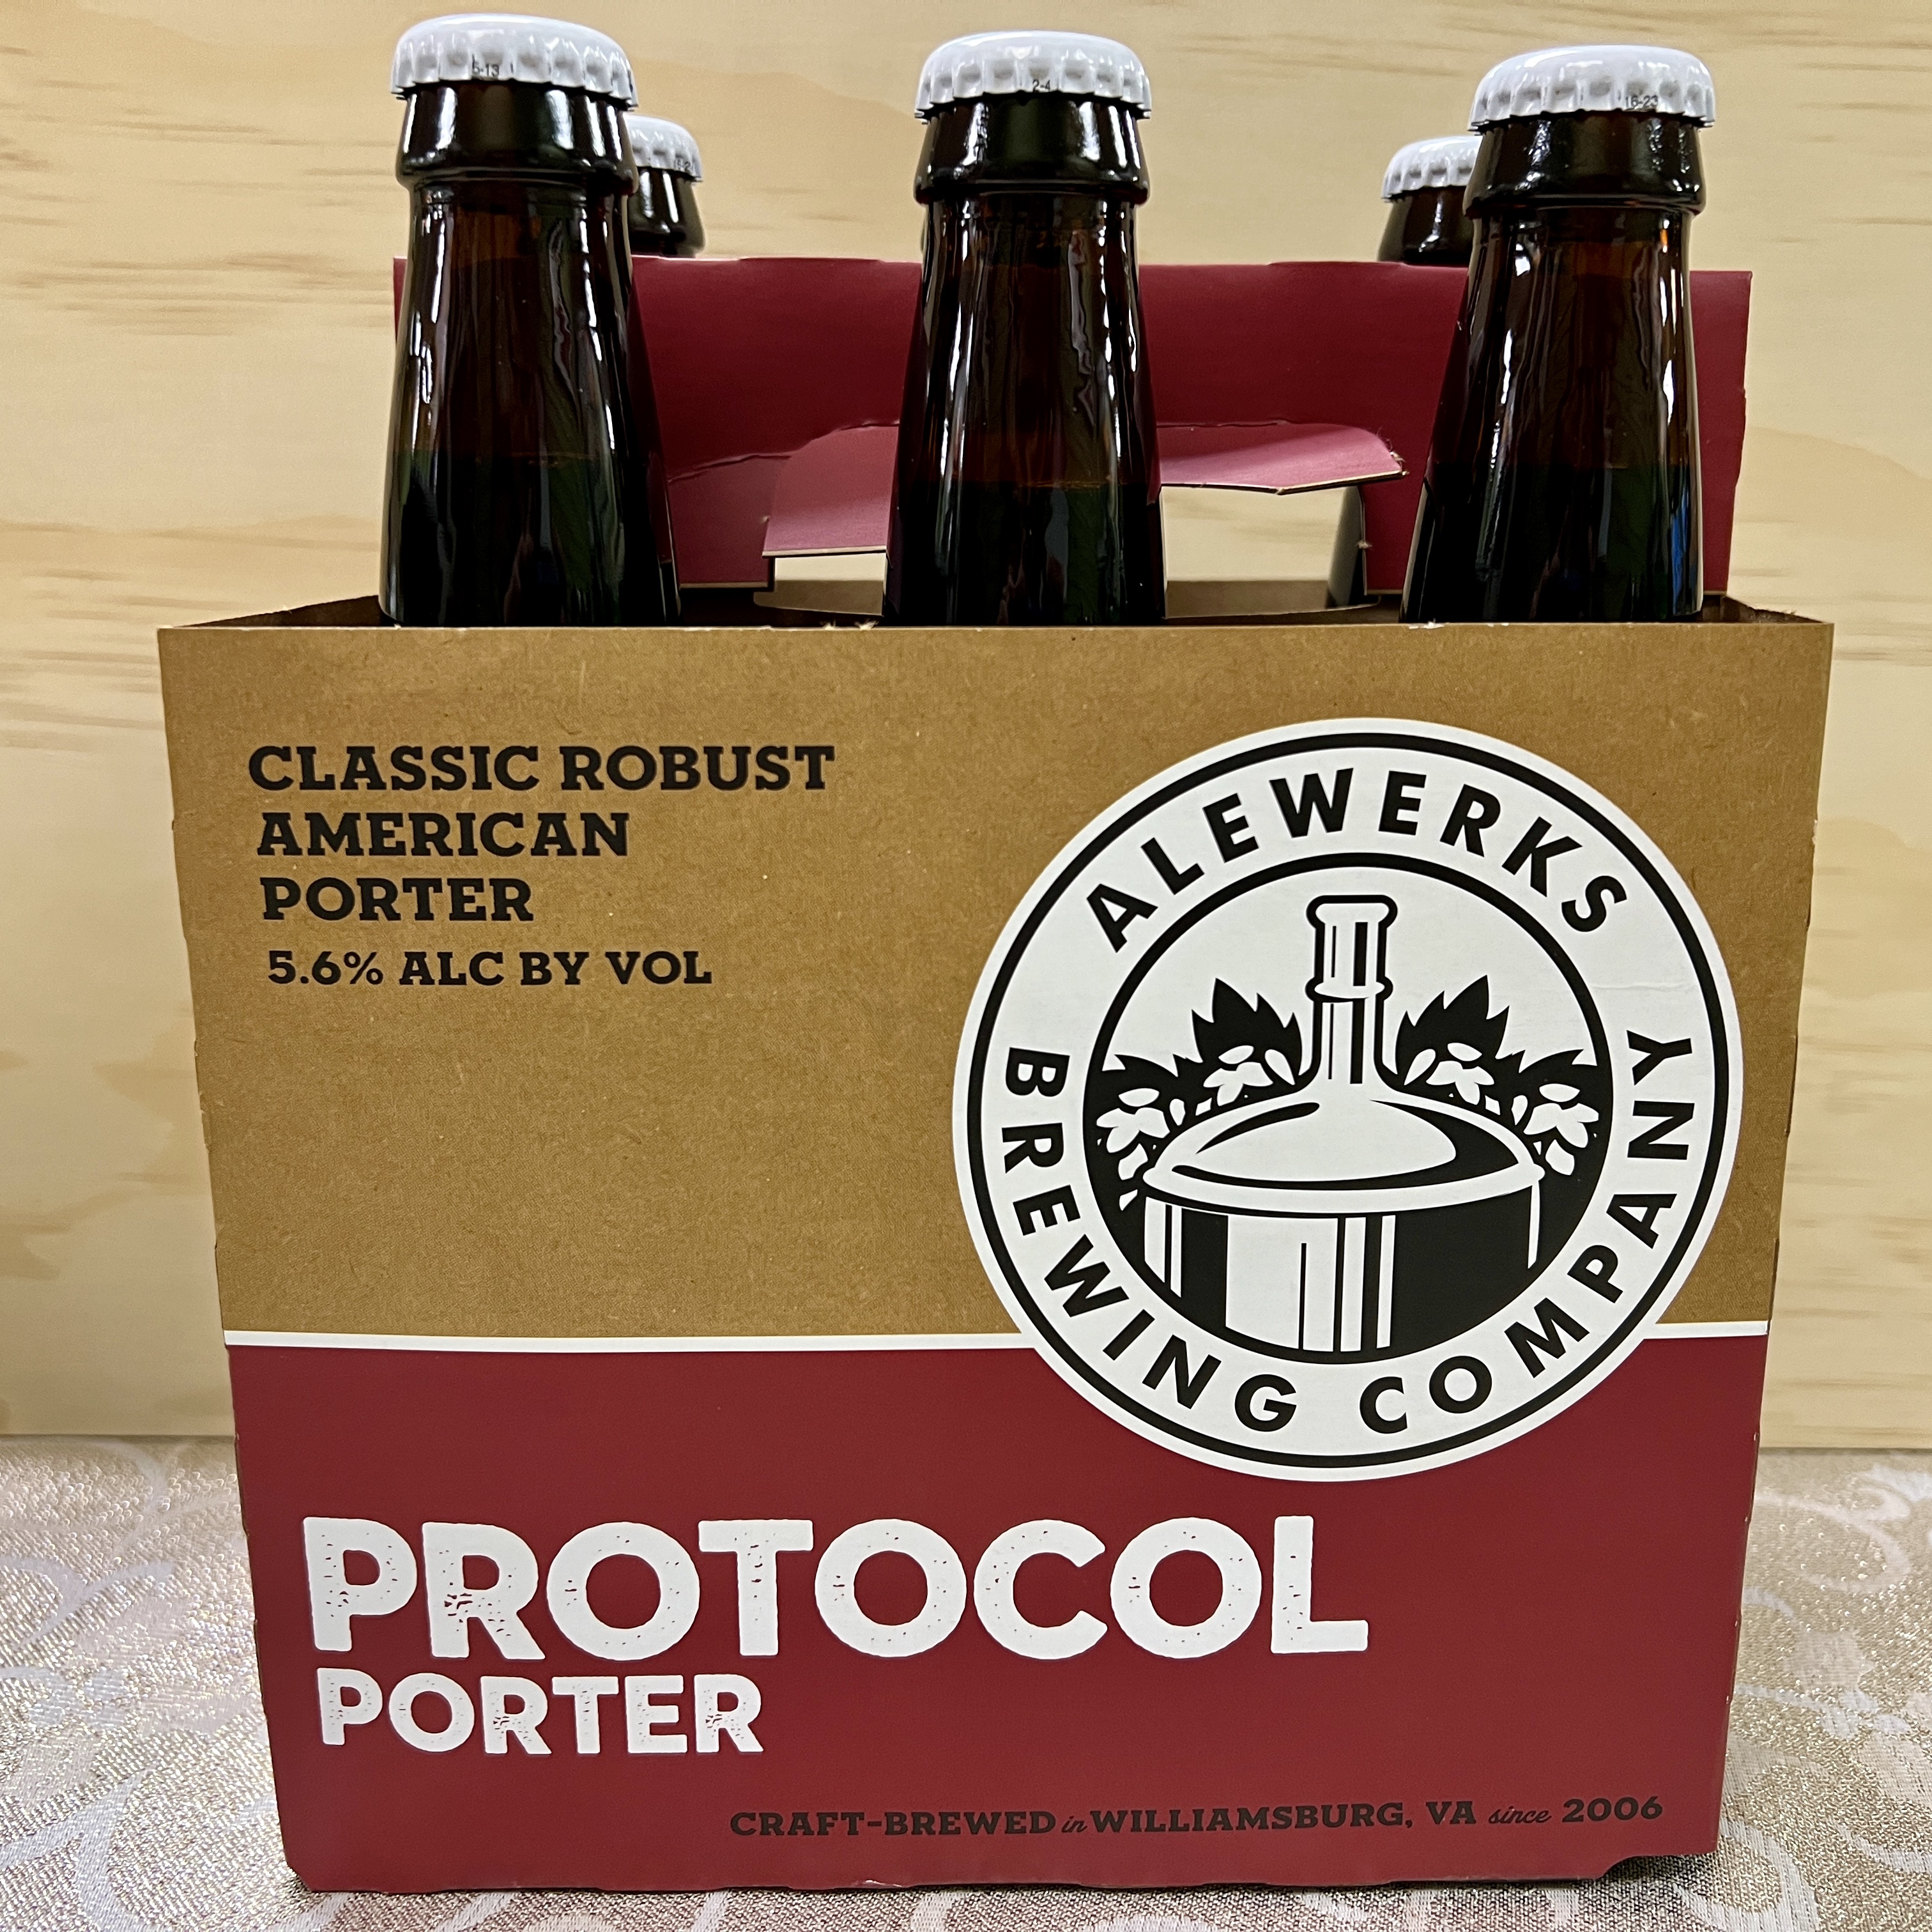 Alewerks Protocol Porter Robust American Porter 6 x 12oz bottles